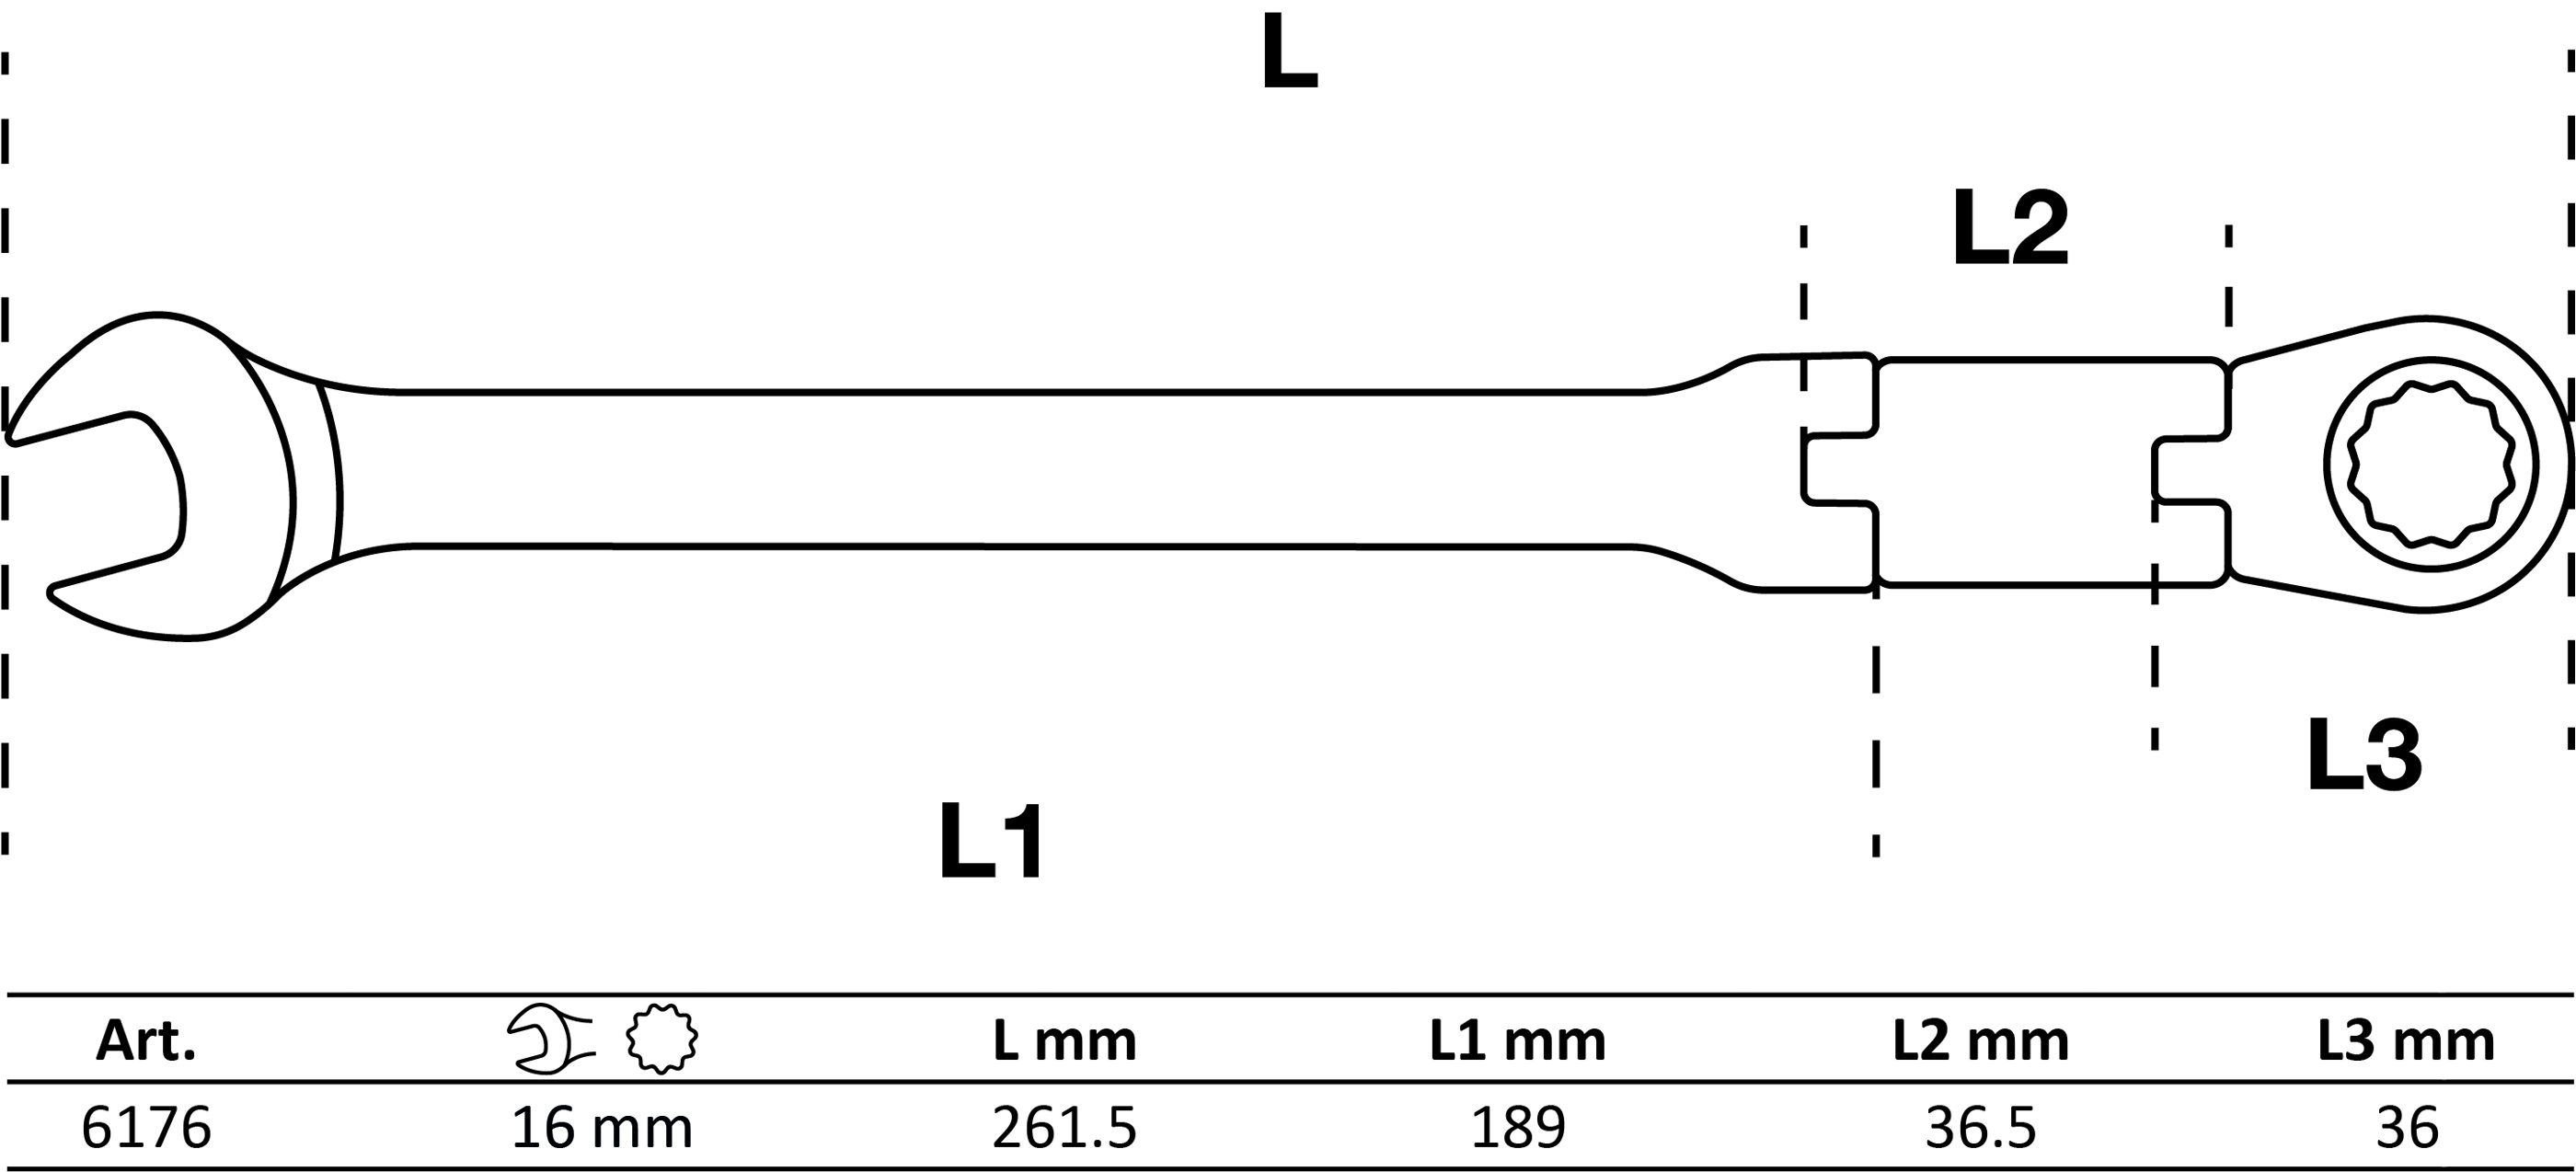 BGS Doppelgelenk-Ratschenring-Maulschlüssel | abwinkelbar | SW 16 mm